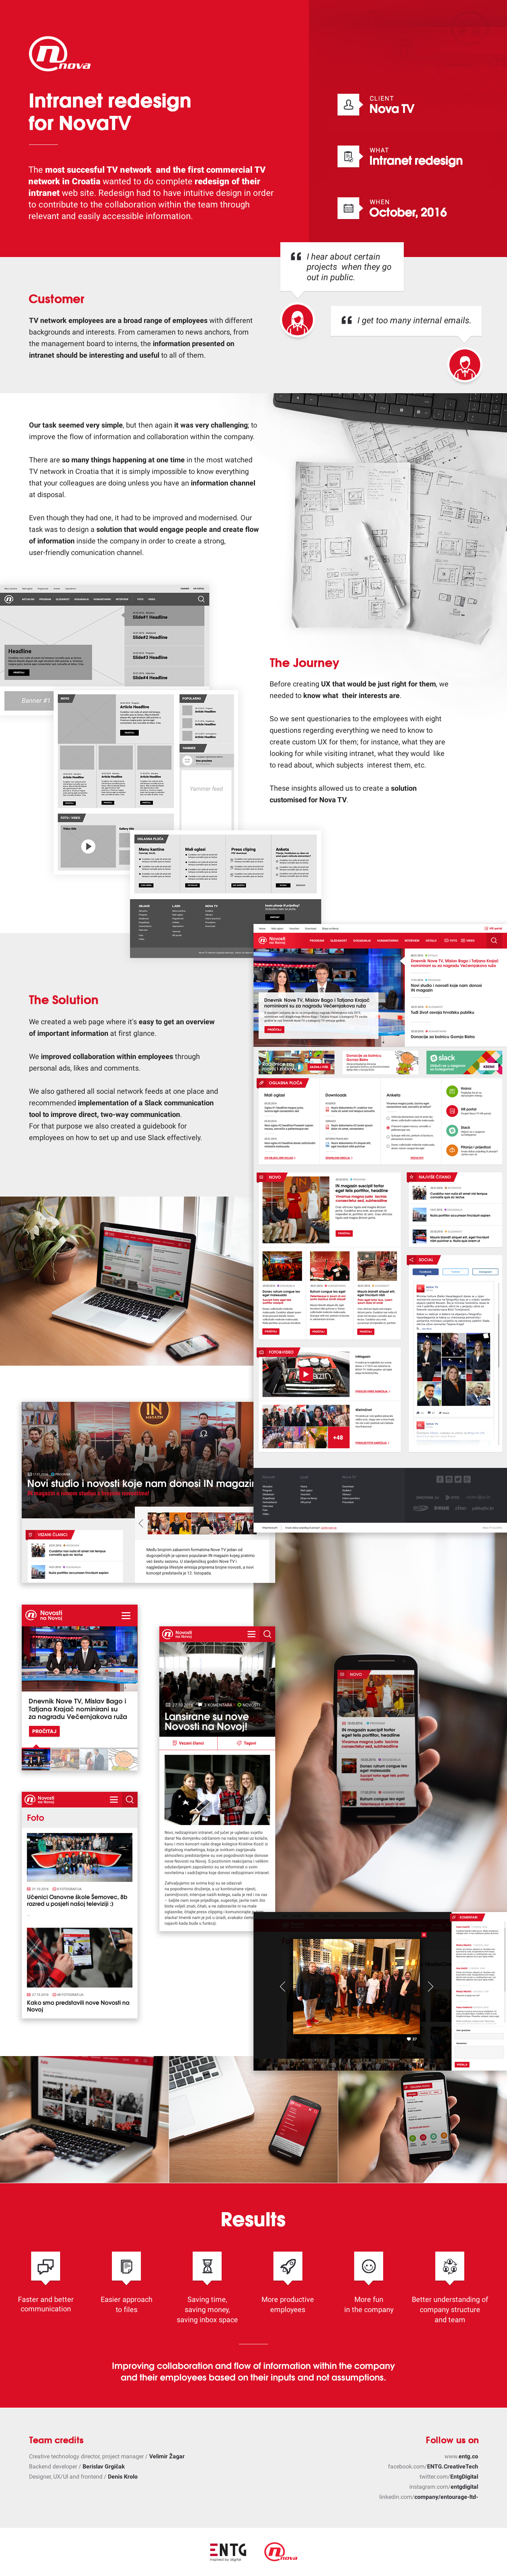 Intranet corporate Web tv network Croatia Nova TV redesign wordpress design development